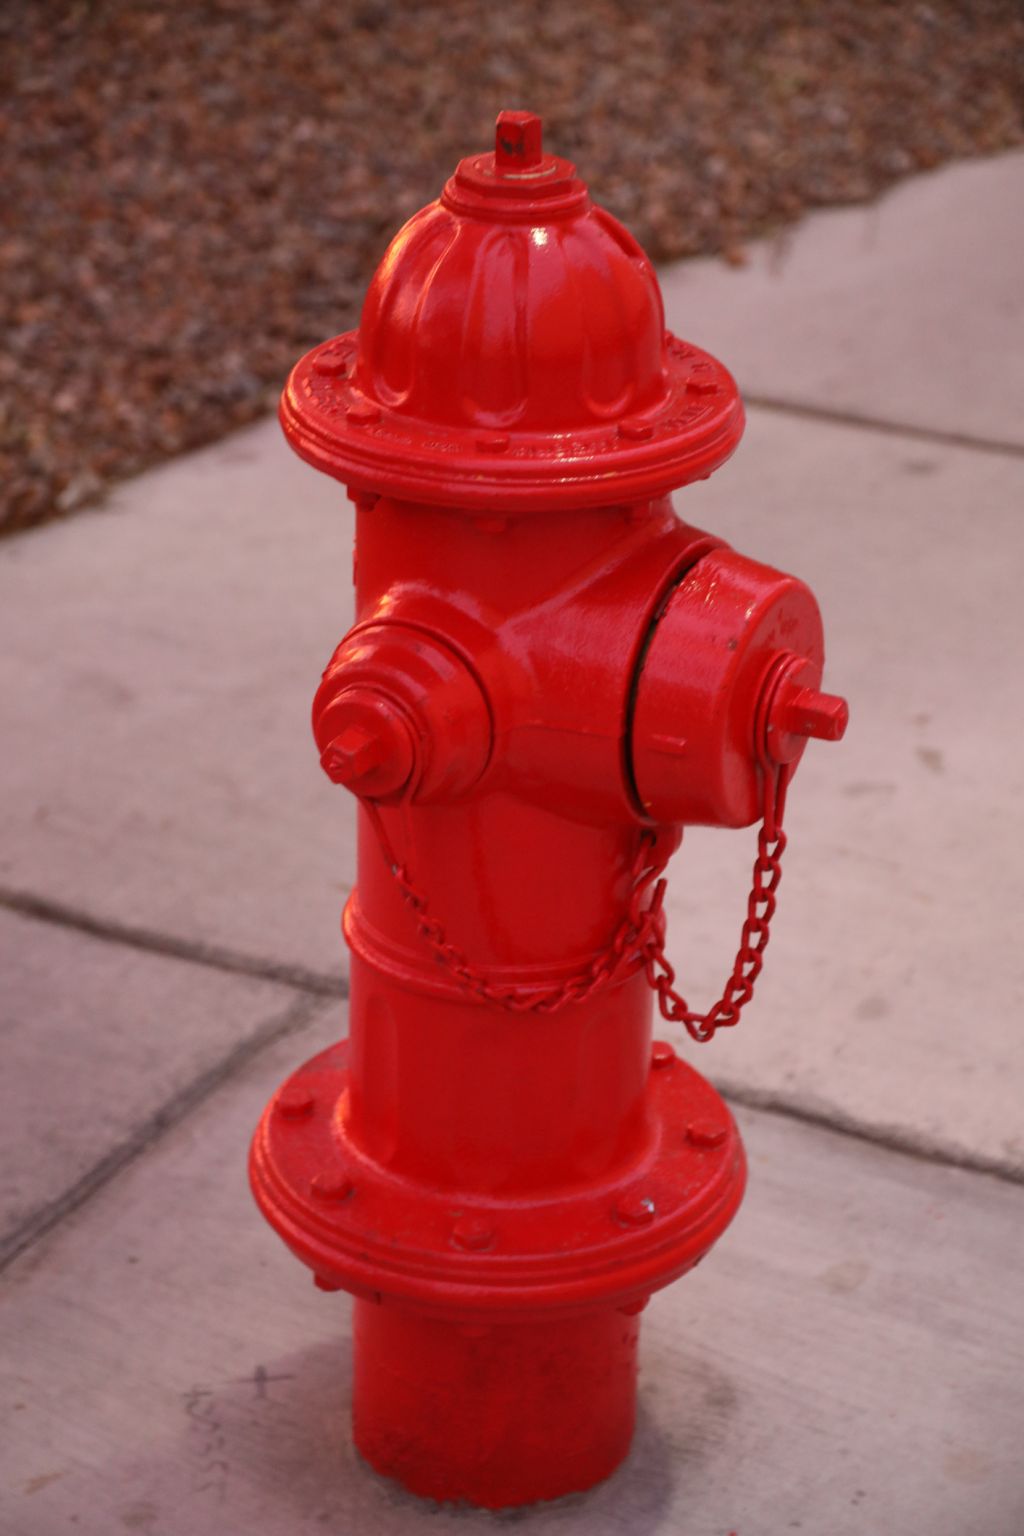 Bright red colored fire hydrant in the concrete sidewalk